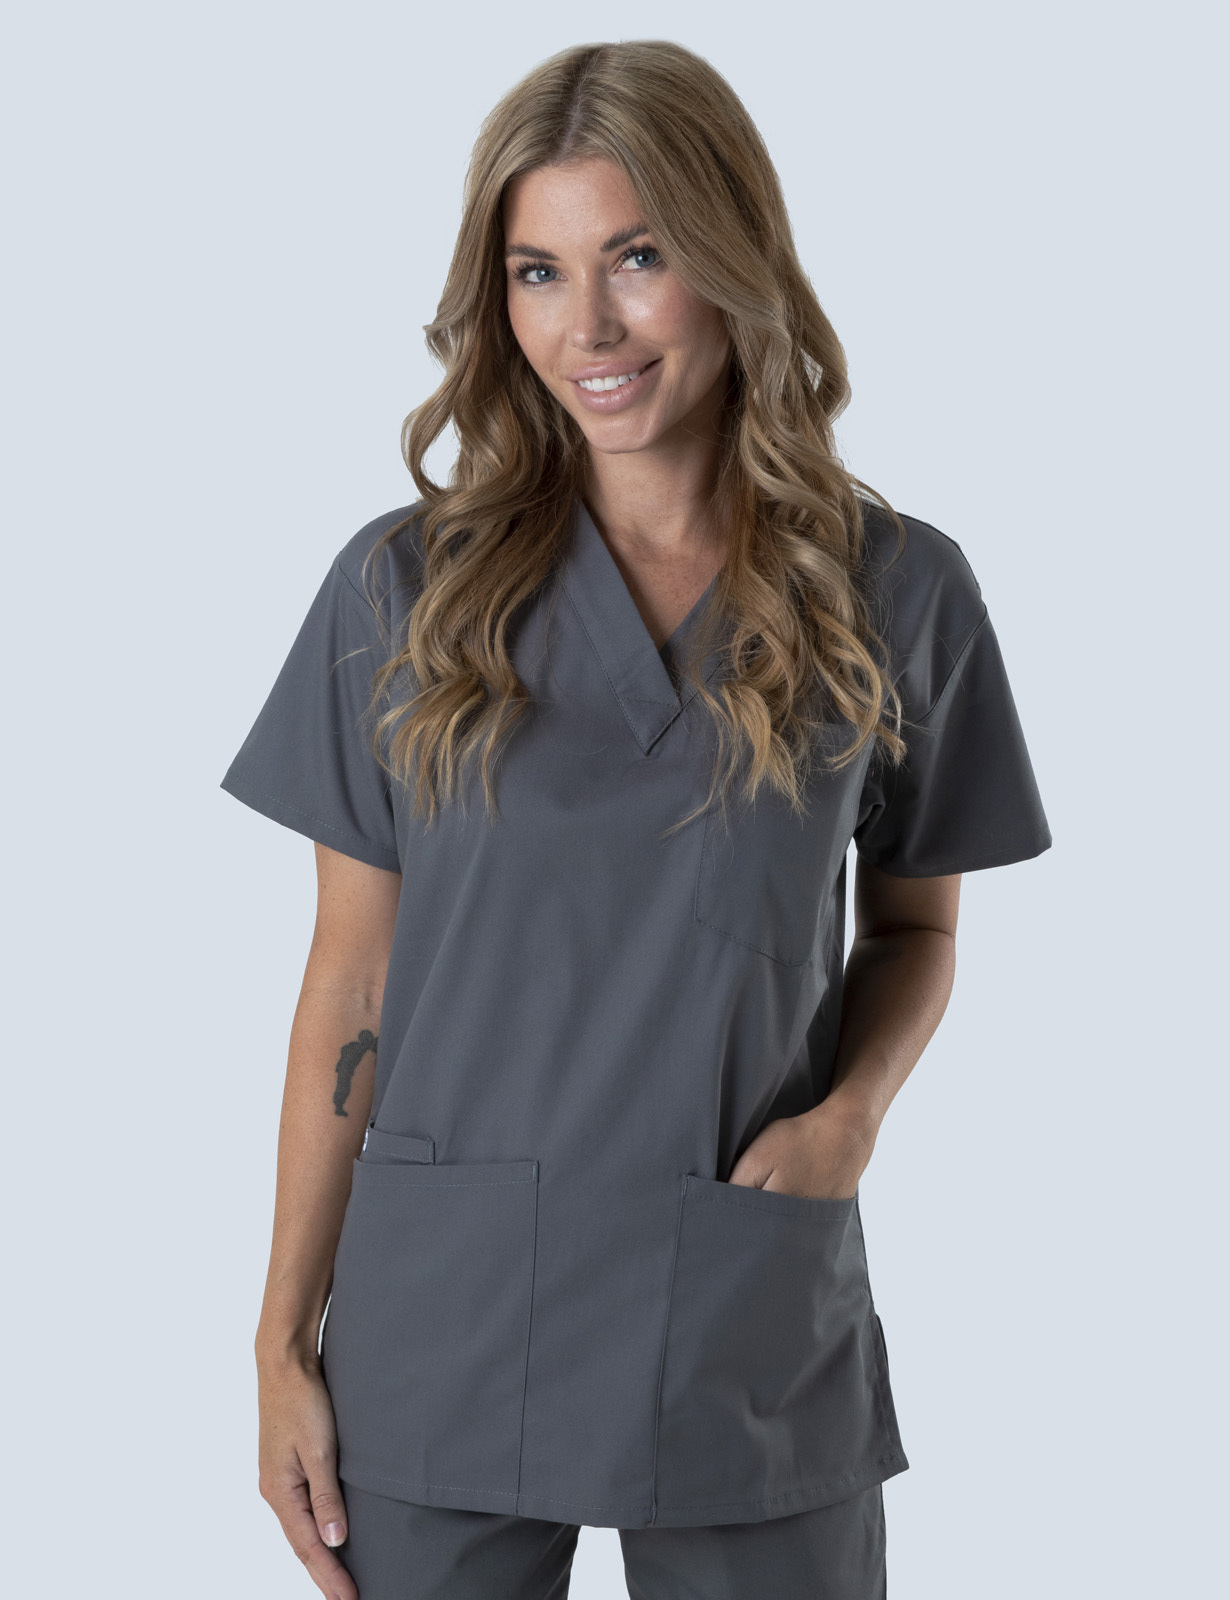 North Shore Private Hospital Imaging Assistant  Uniform Top Only Bundle (4 Pocket Top in Steel Grey + Logo)